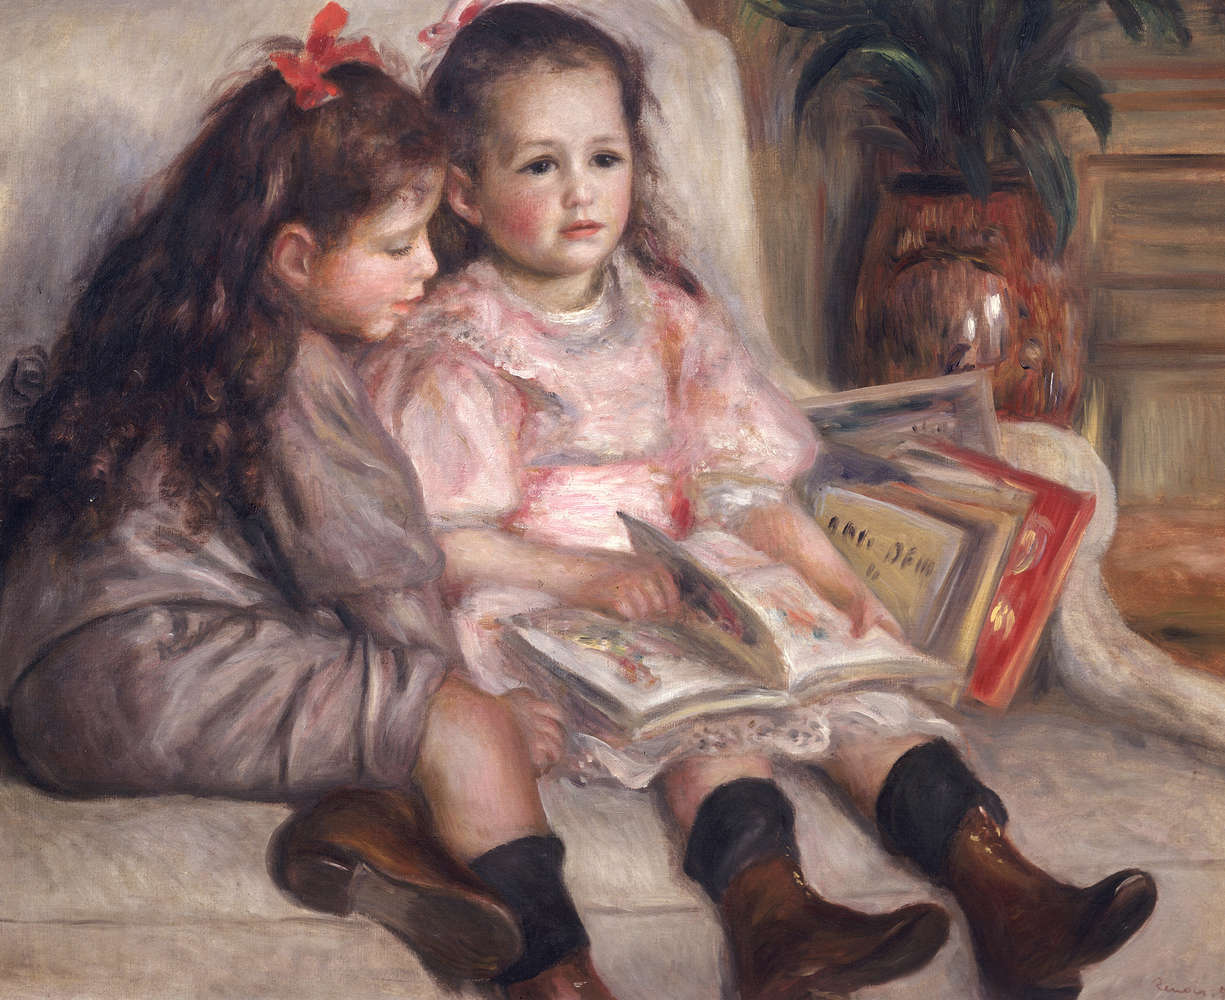             Photo wallpaper "Portraits of children" by Pierre Auguste Renoir
        